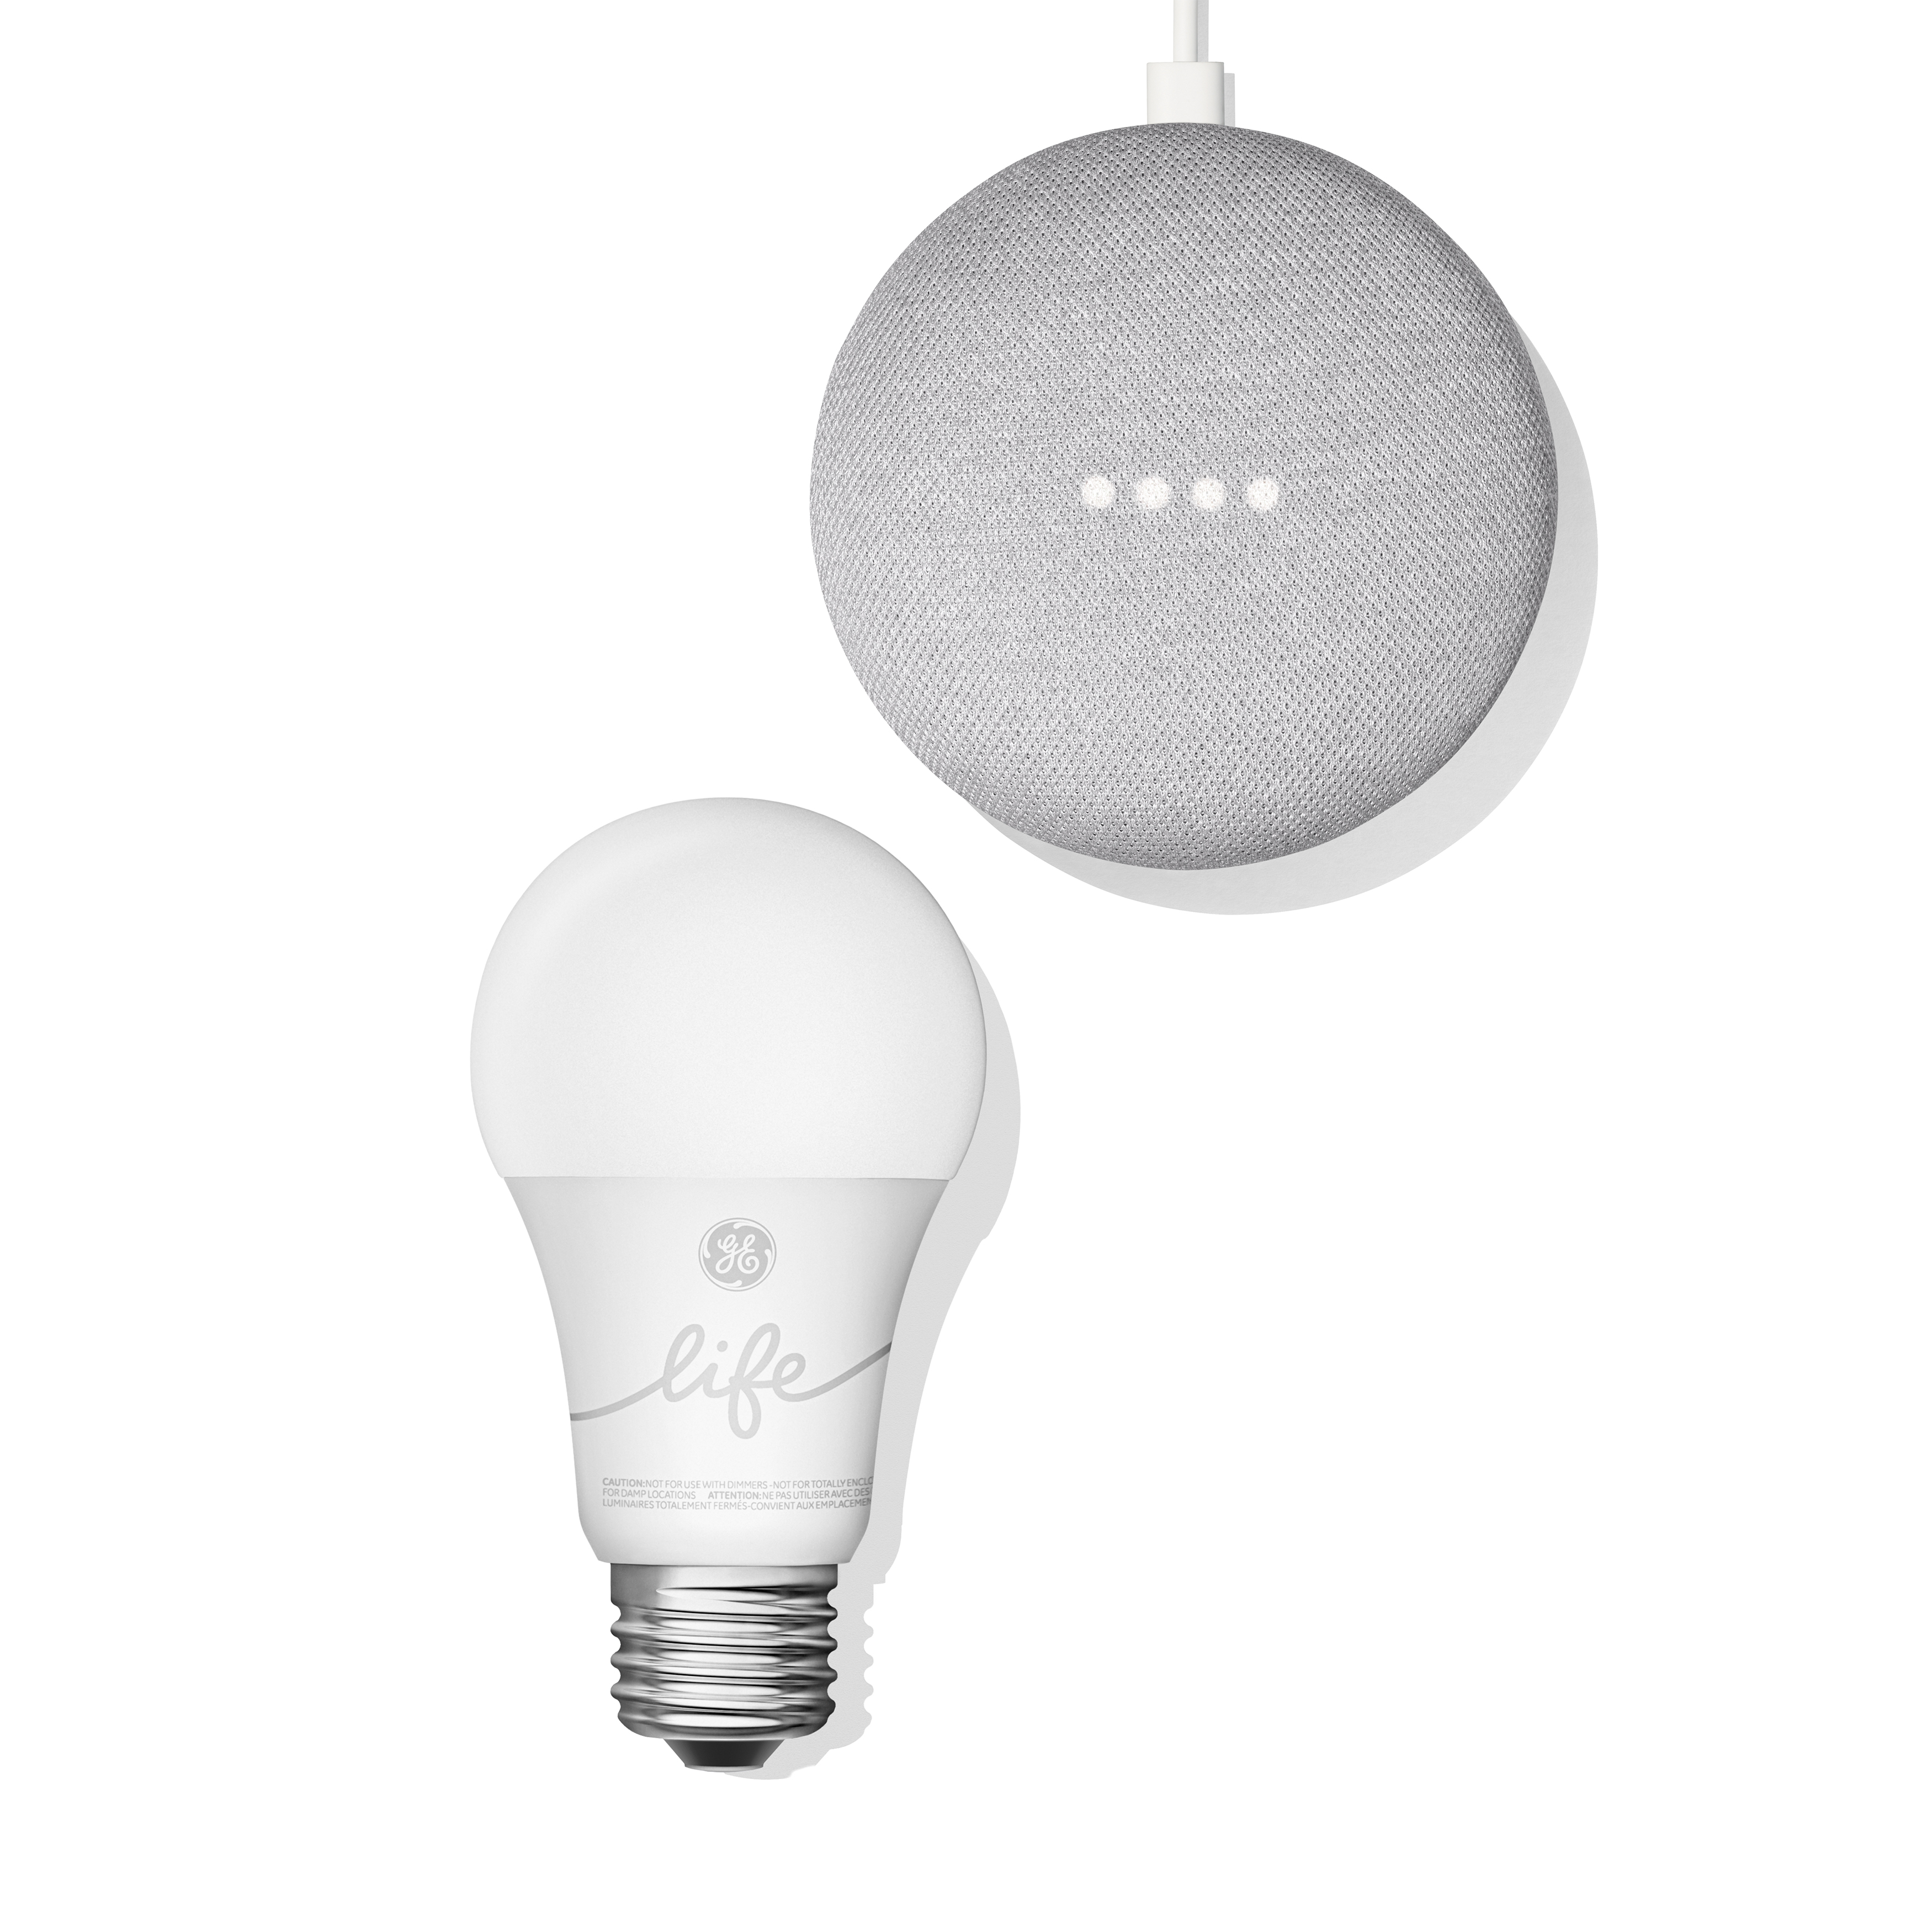 Google Smart Light Starter Kit - Google Home Mini and GE C-Life Smart Light Bulb - image 3 of 5